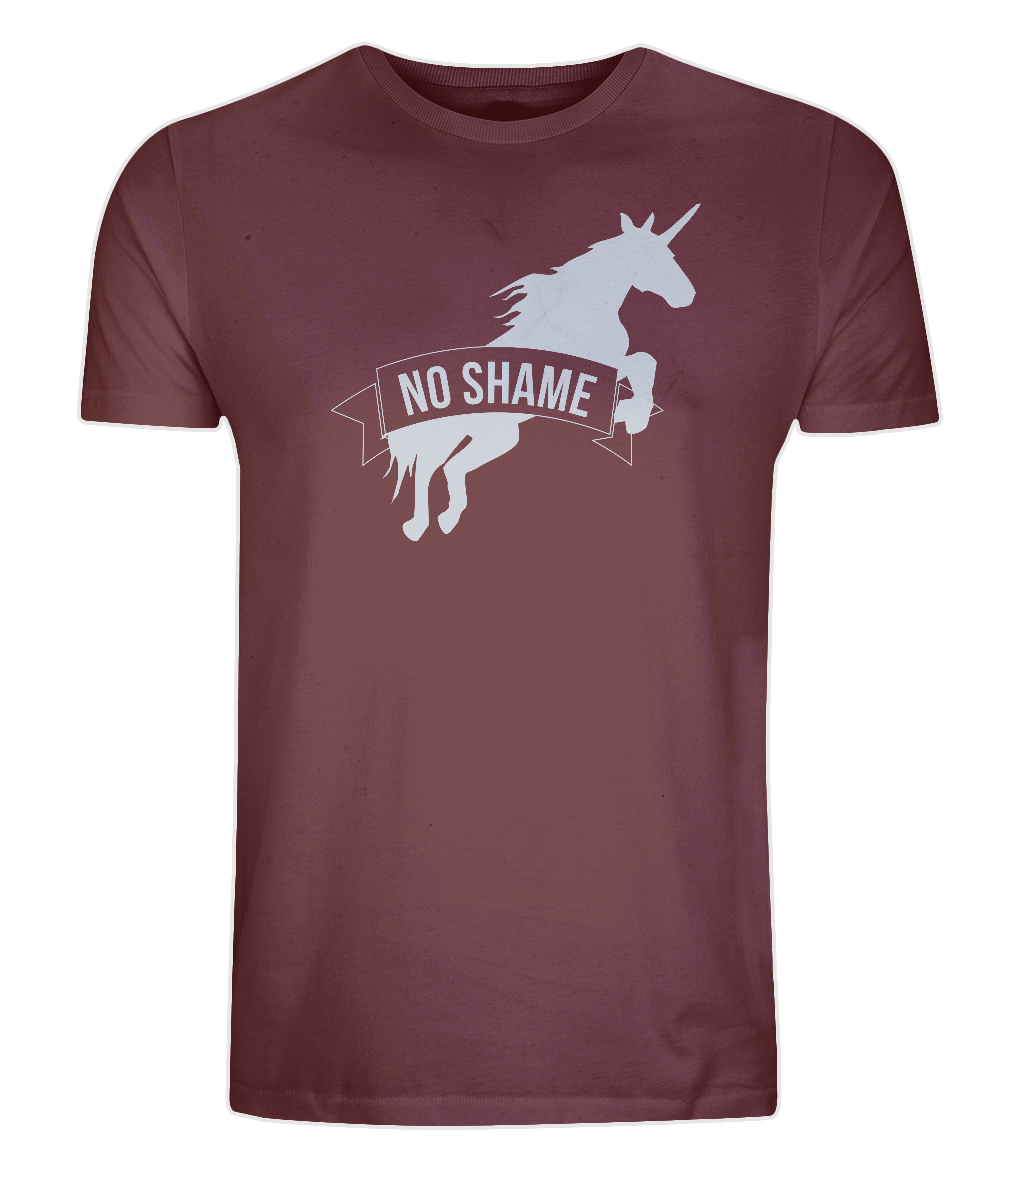 No shame Unicorn Organic T-shirt